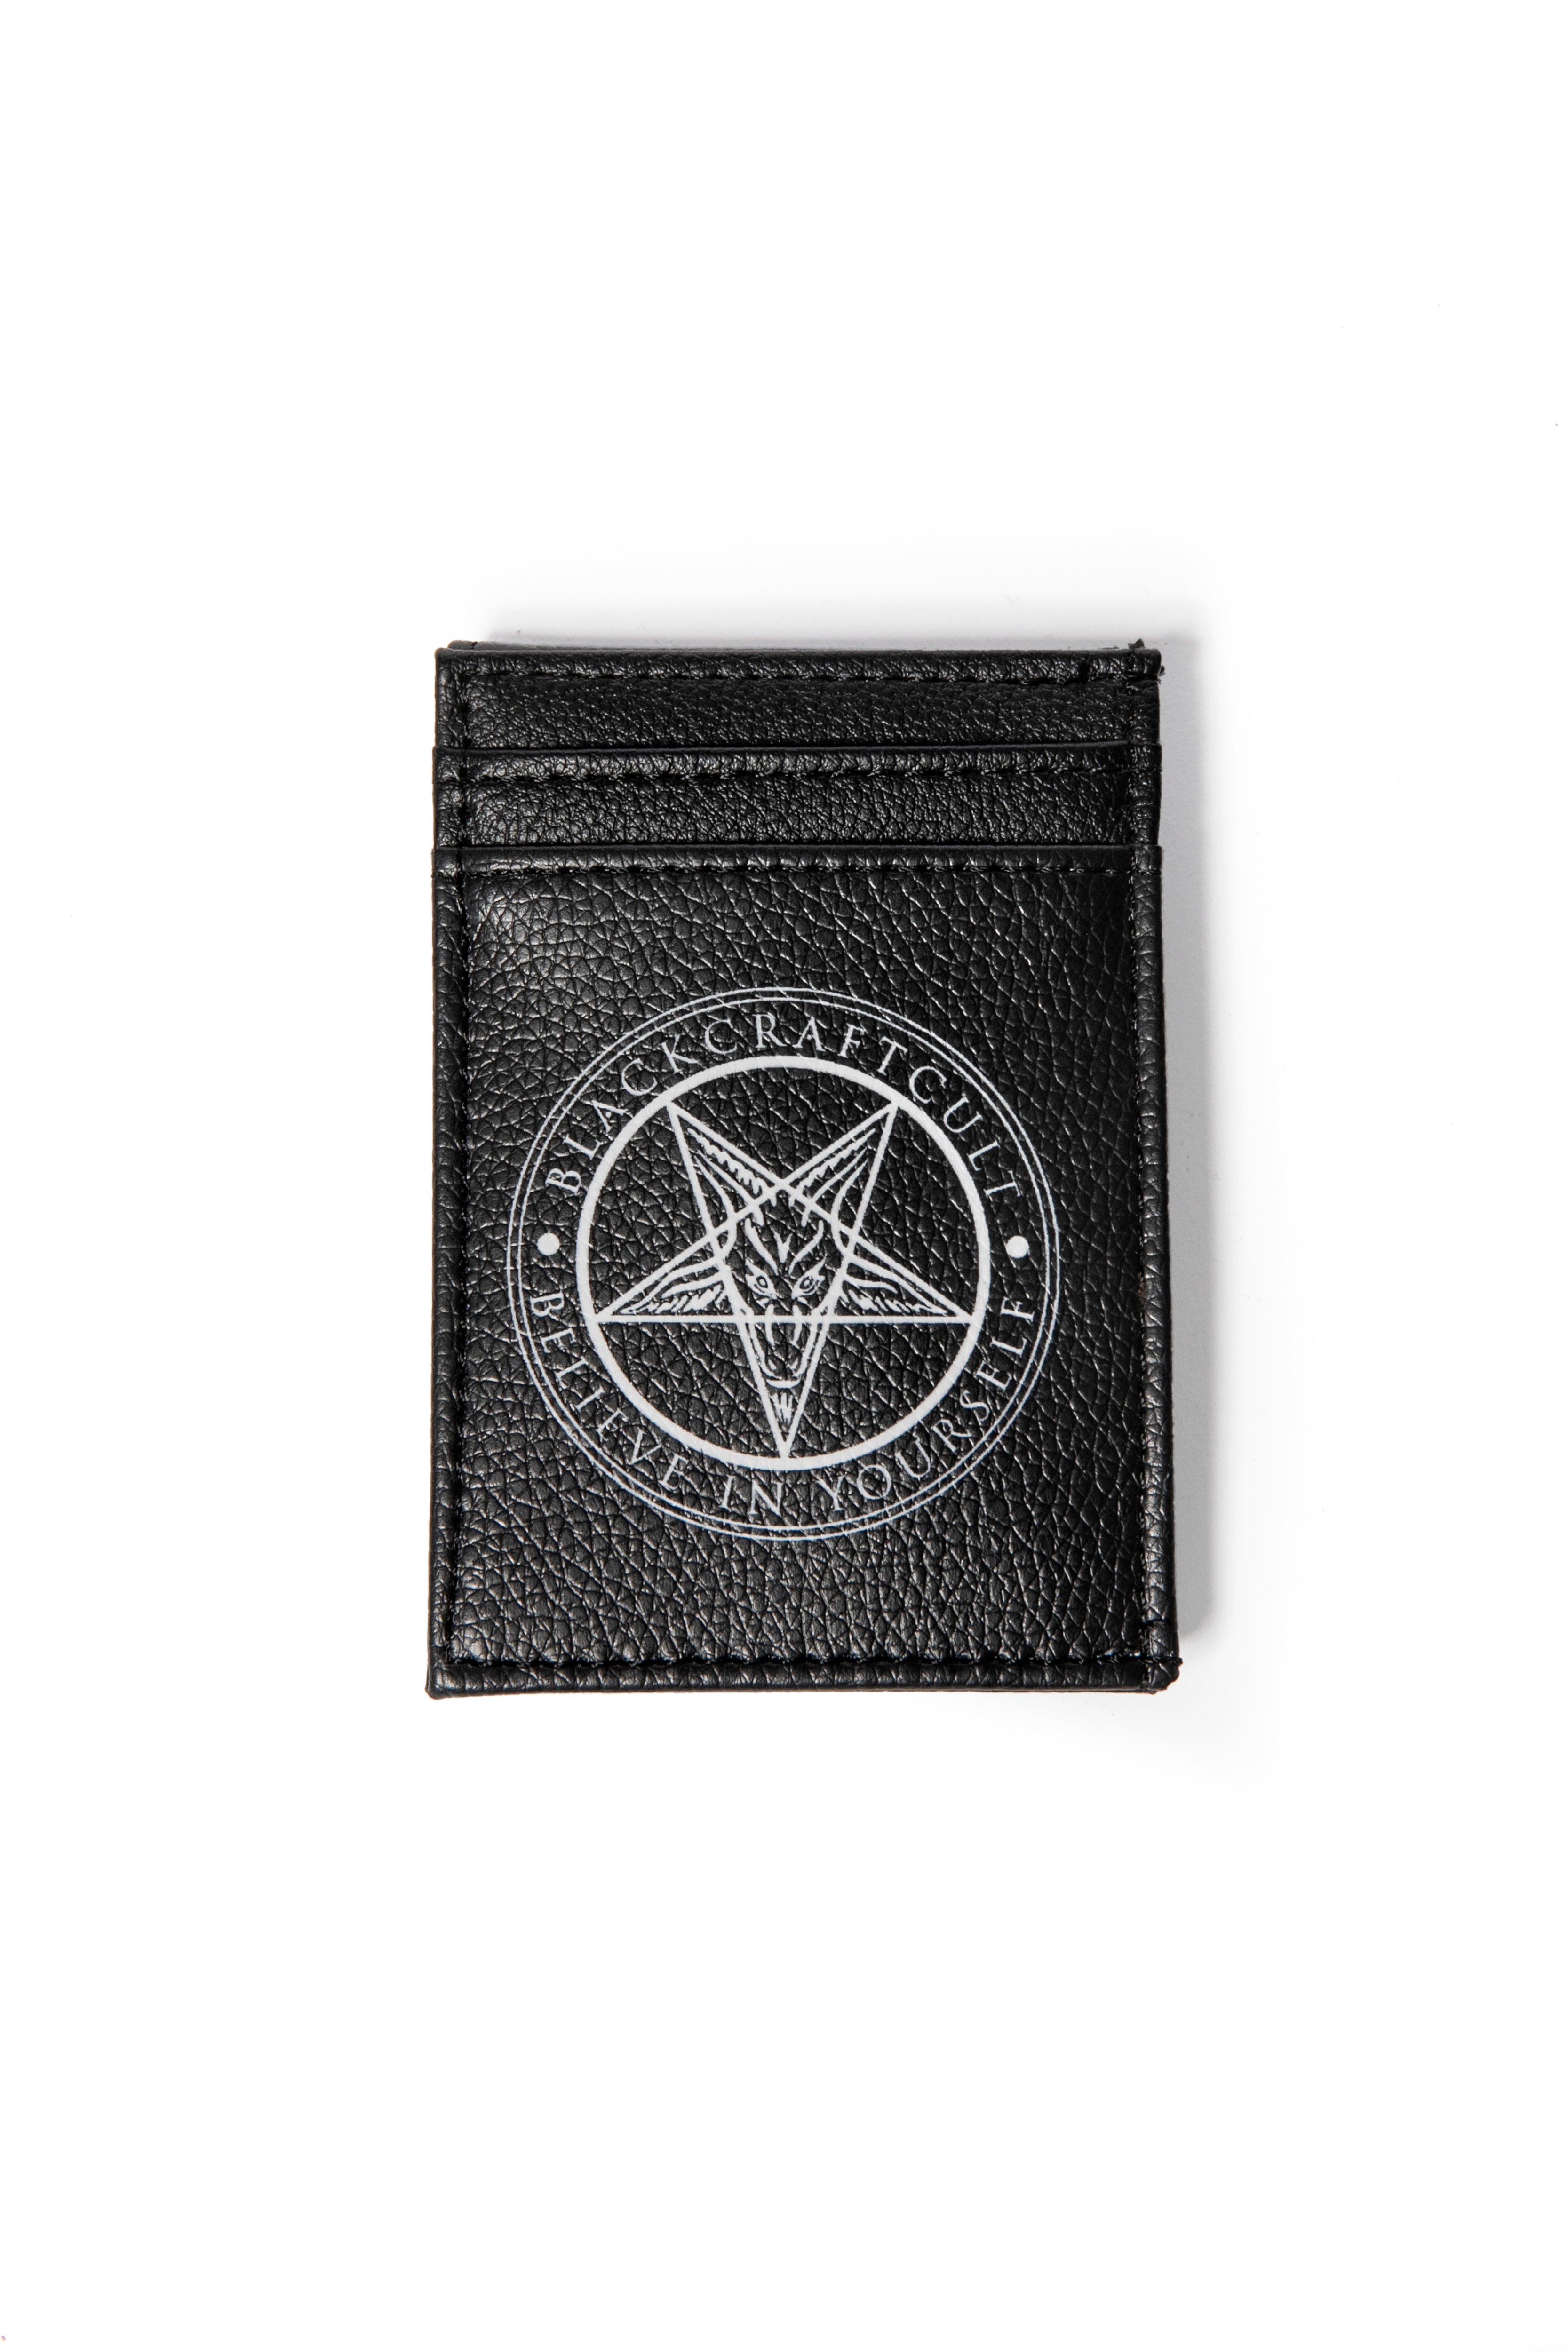 Black floral leather minimalist keychain card wallet – SheBuilt